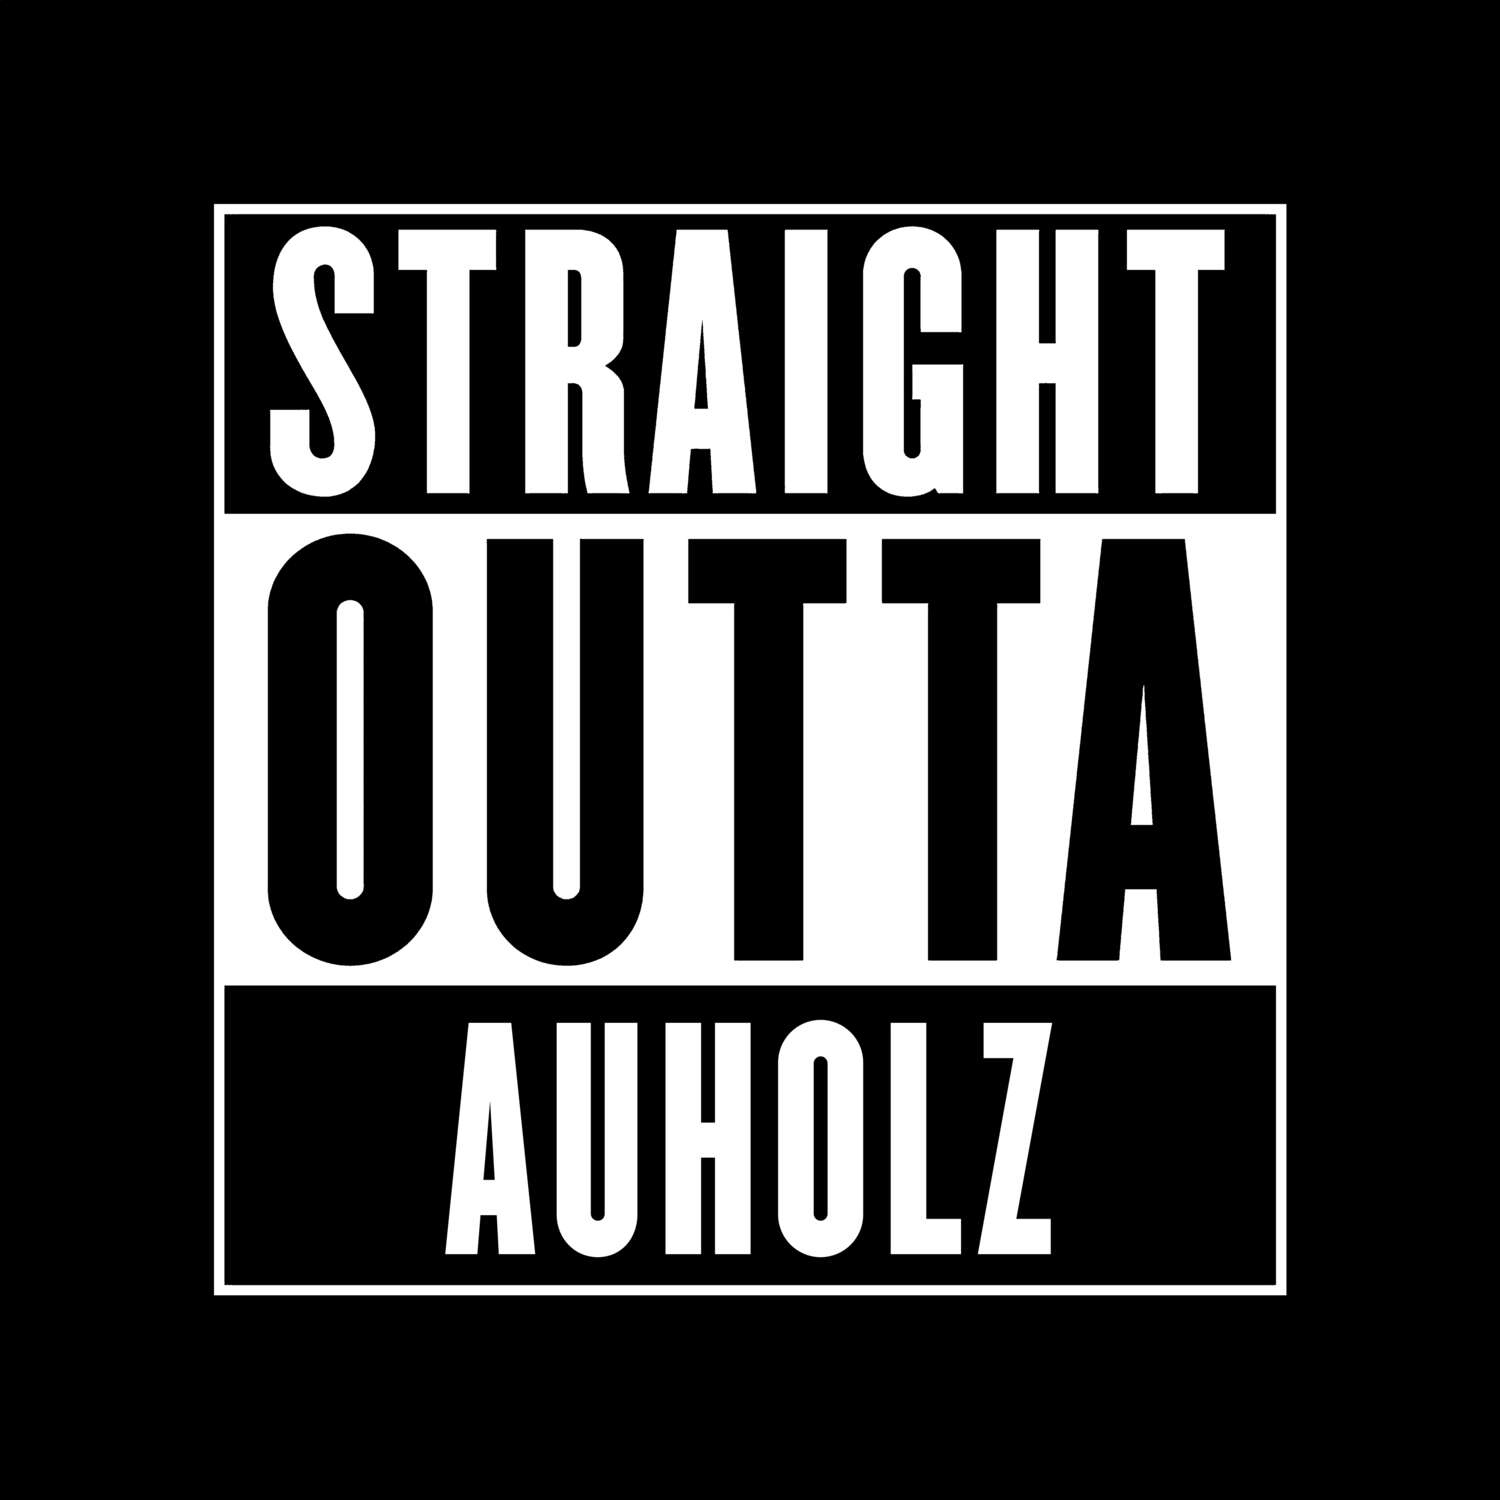 Auholz T-Shirt »Straight Outta«